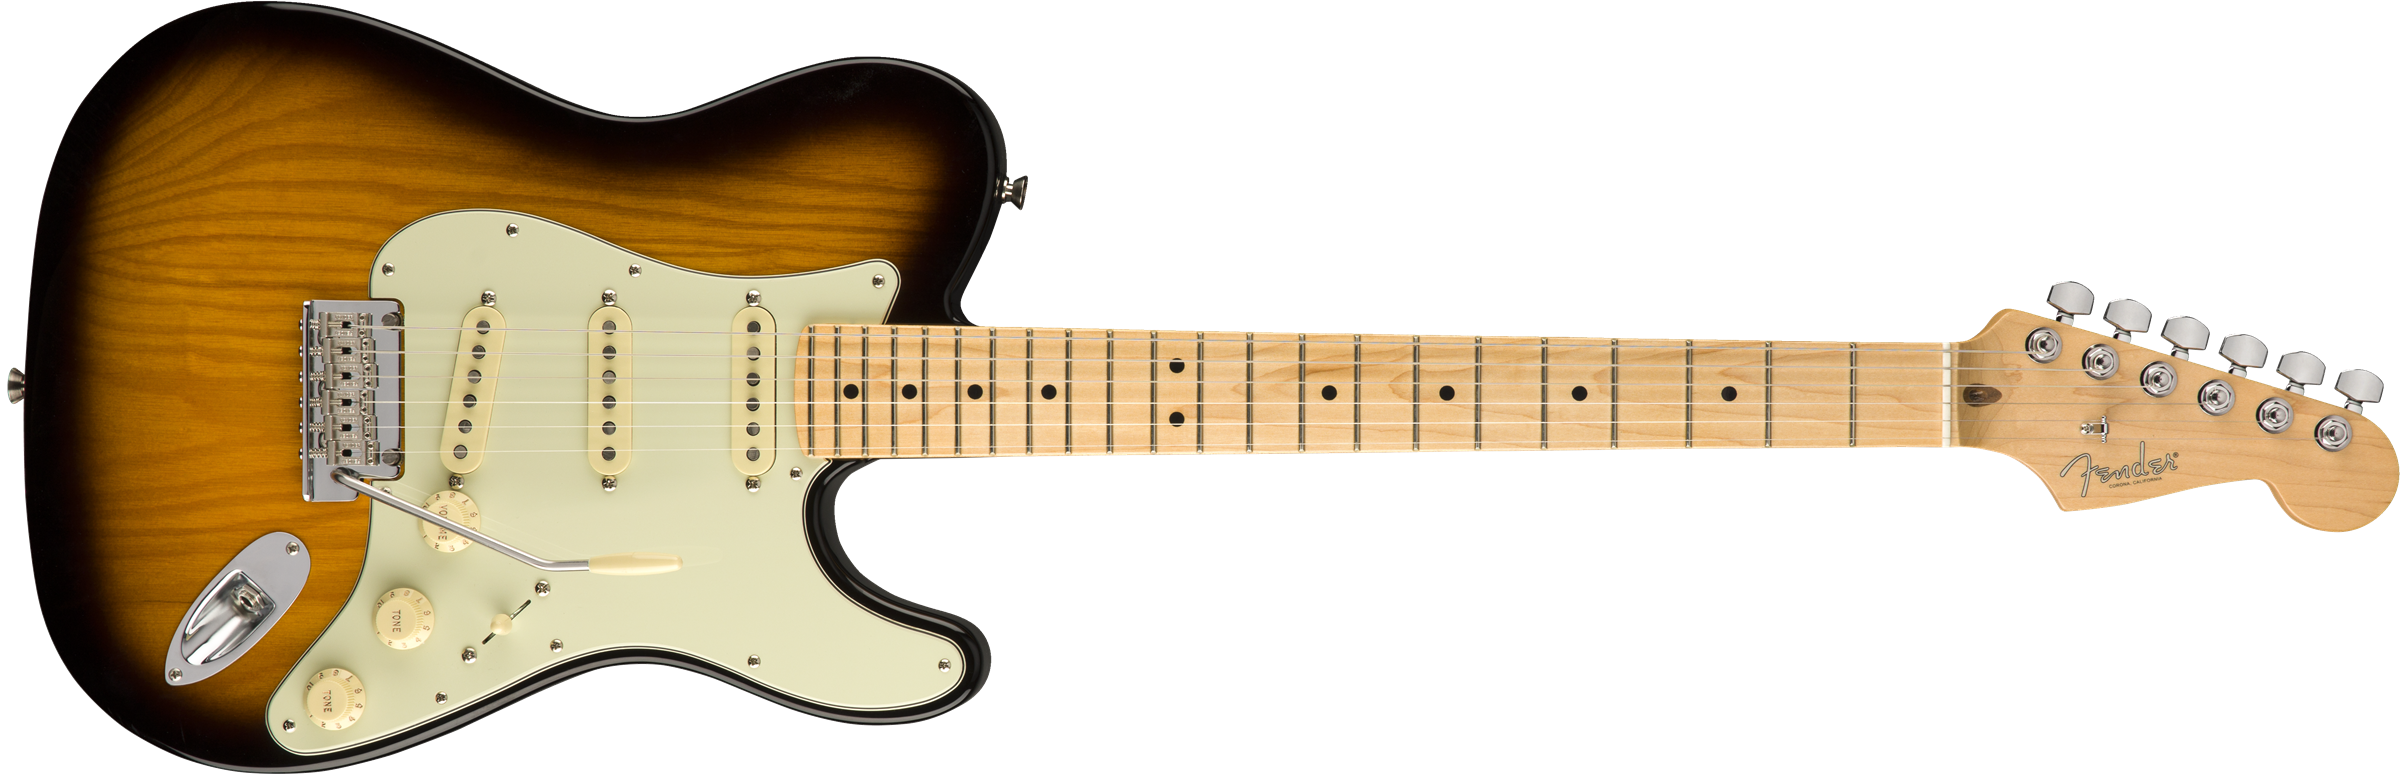 Foto da guitarra Fender Strat-Tele Hybrid